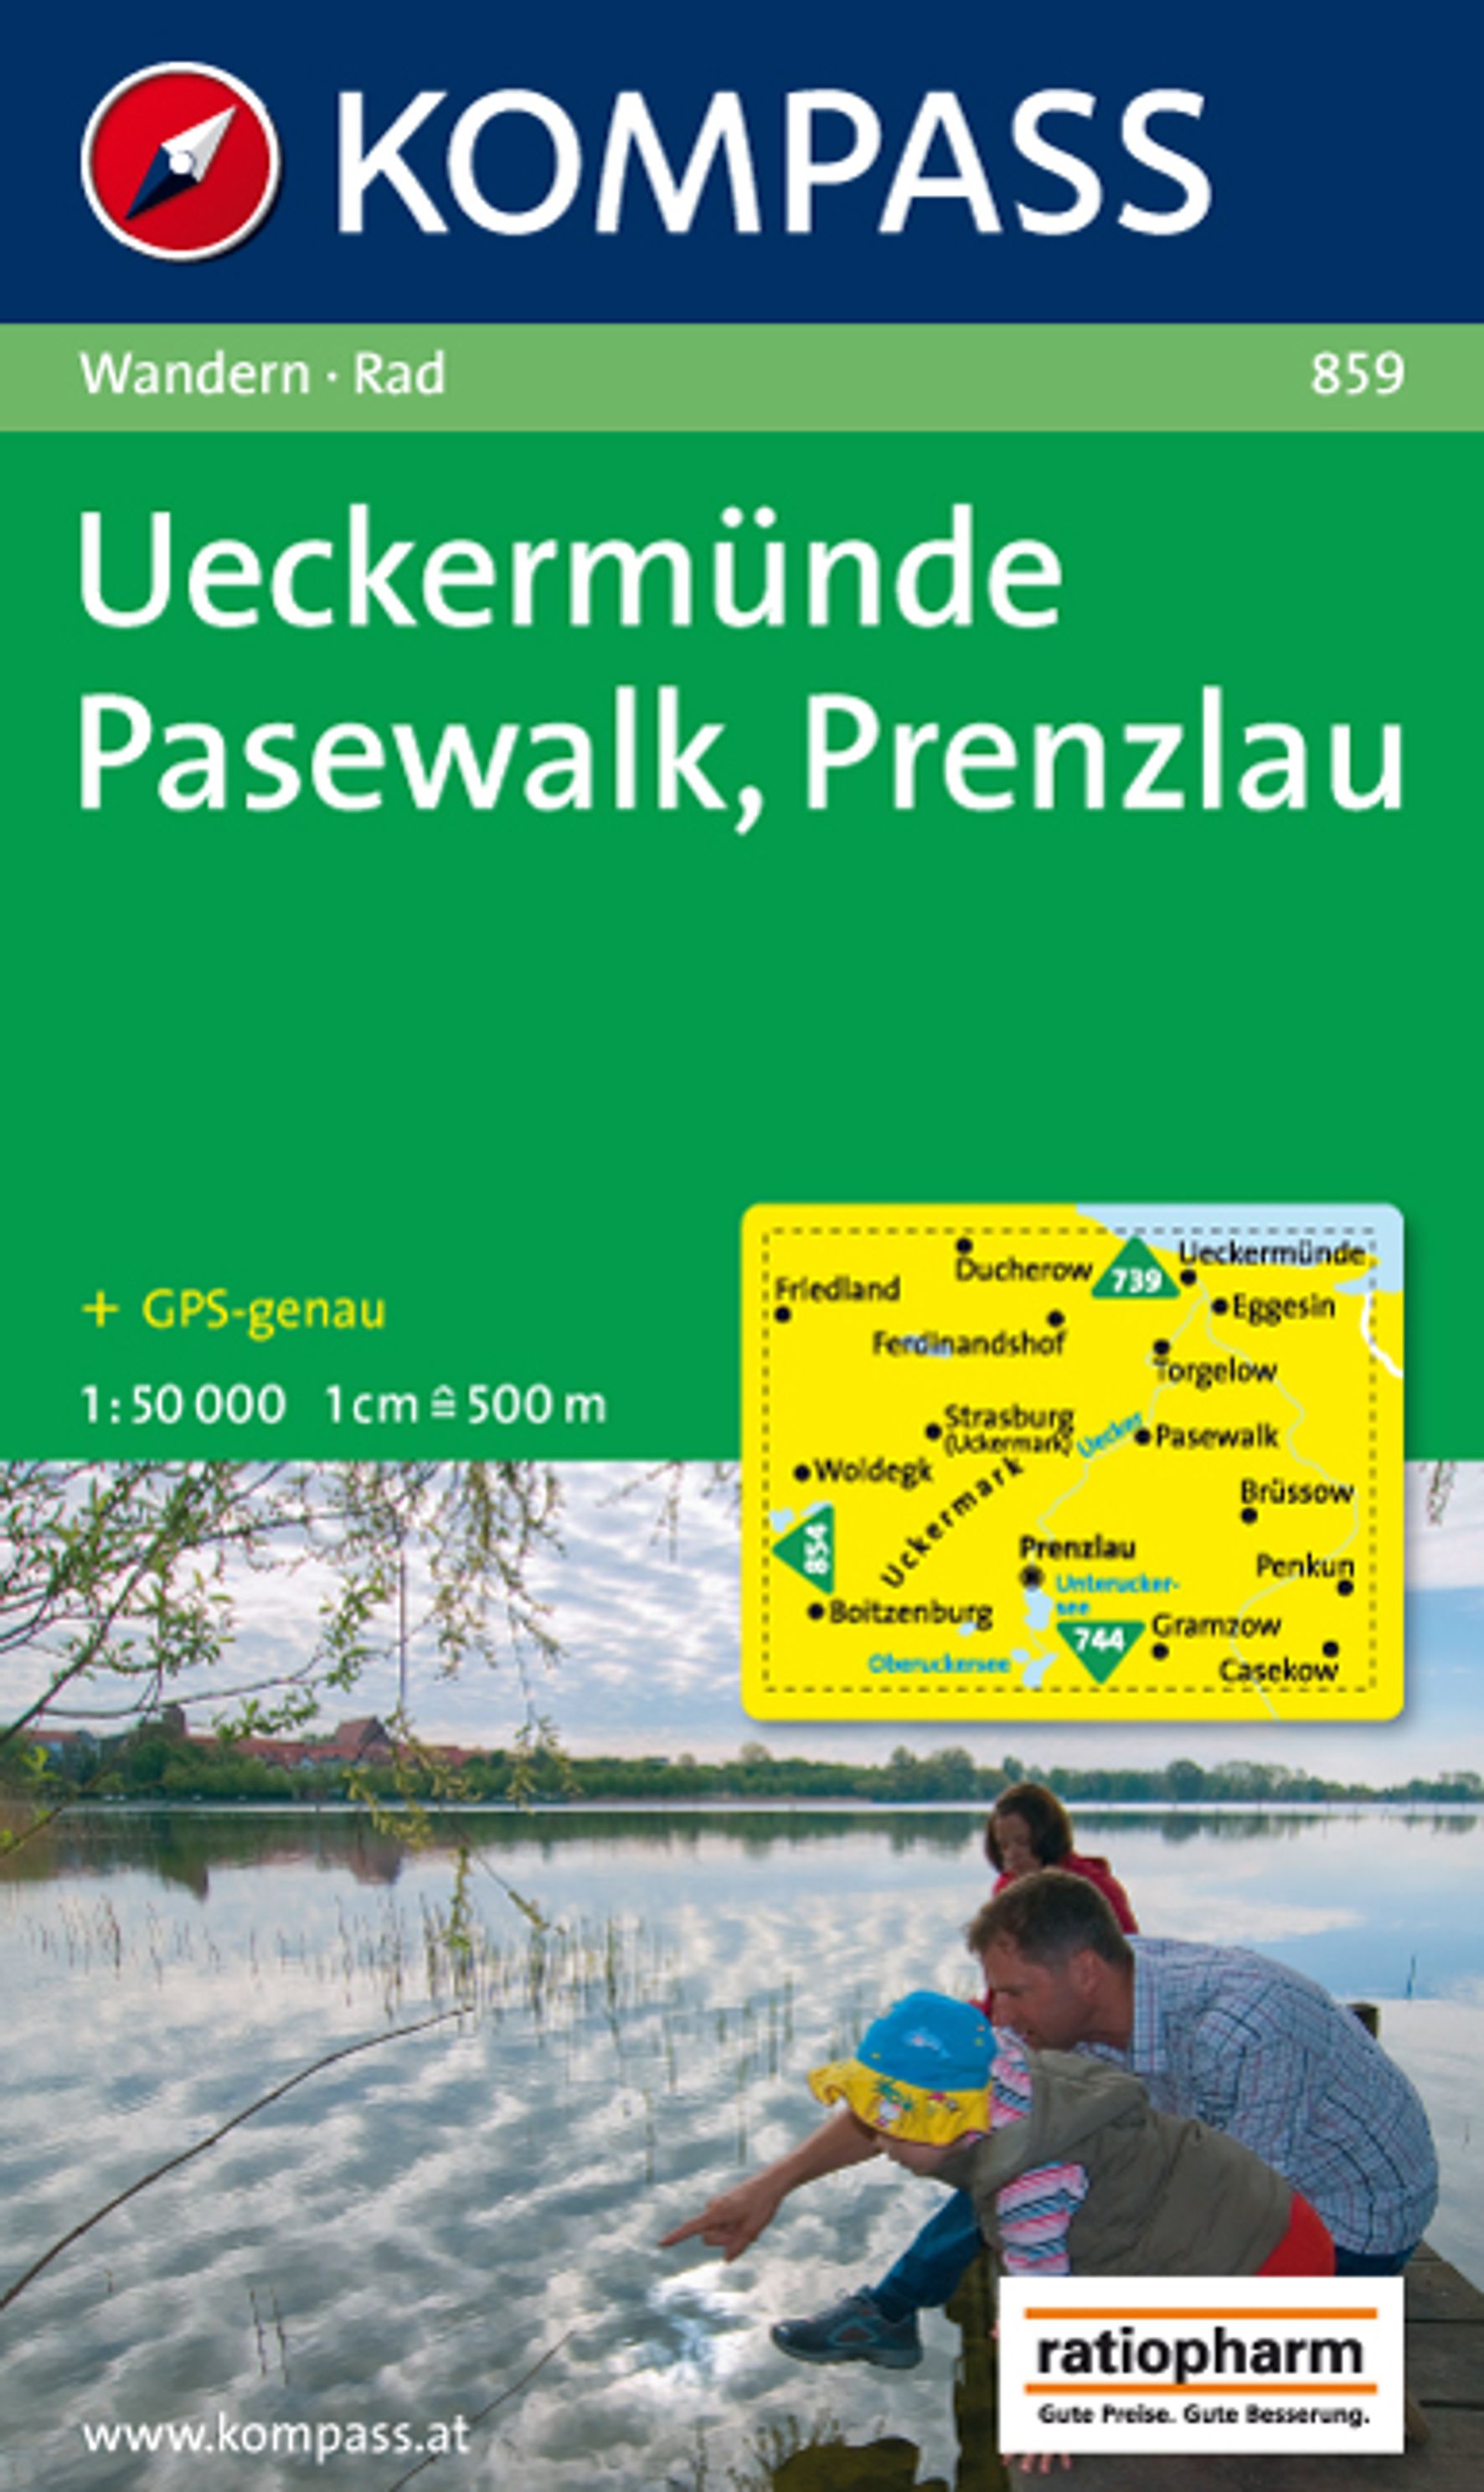 MAIRDUMONT KOMPASS Wanderkarte Ueckermünde - Pasewalk - Prenzlau